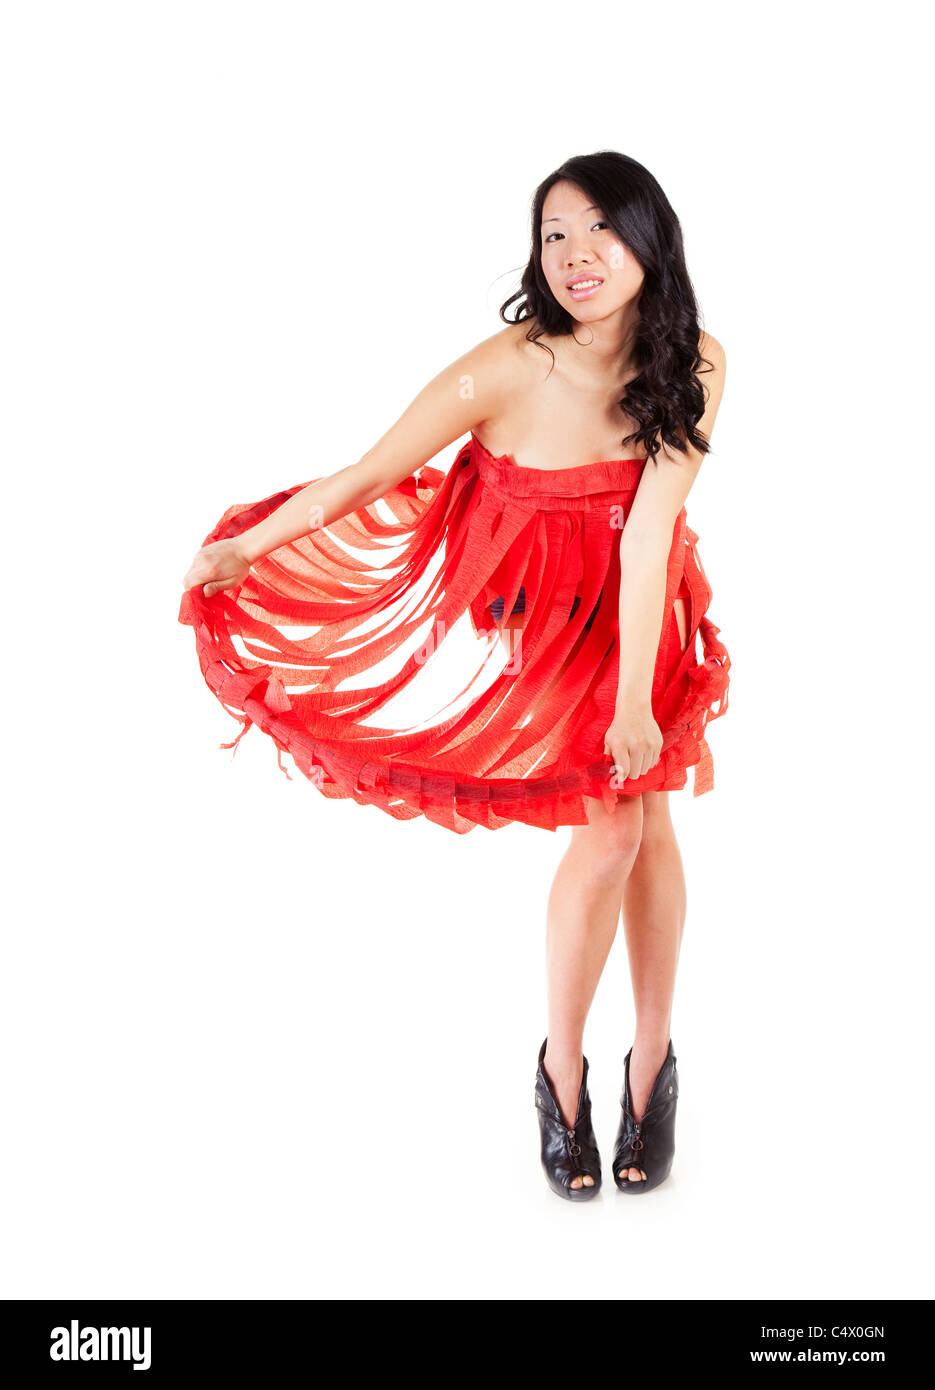 red dress Stock Photo